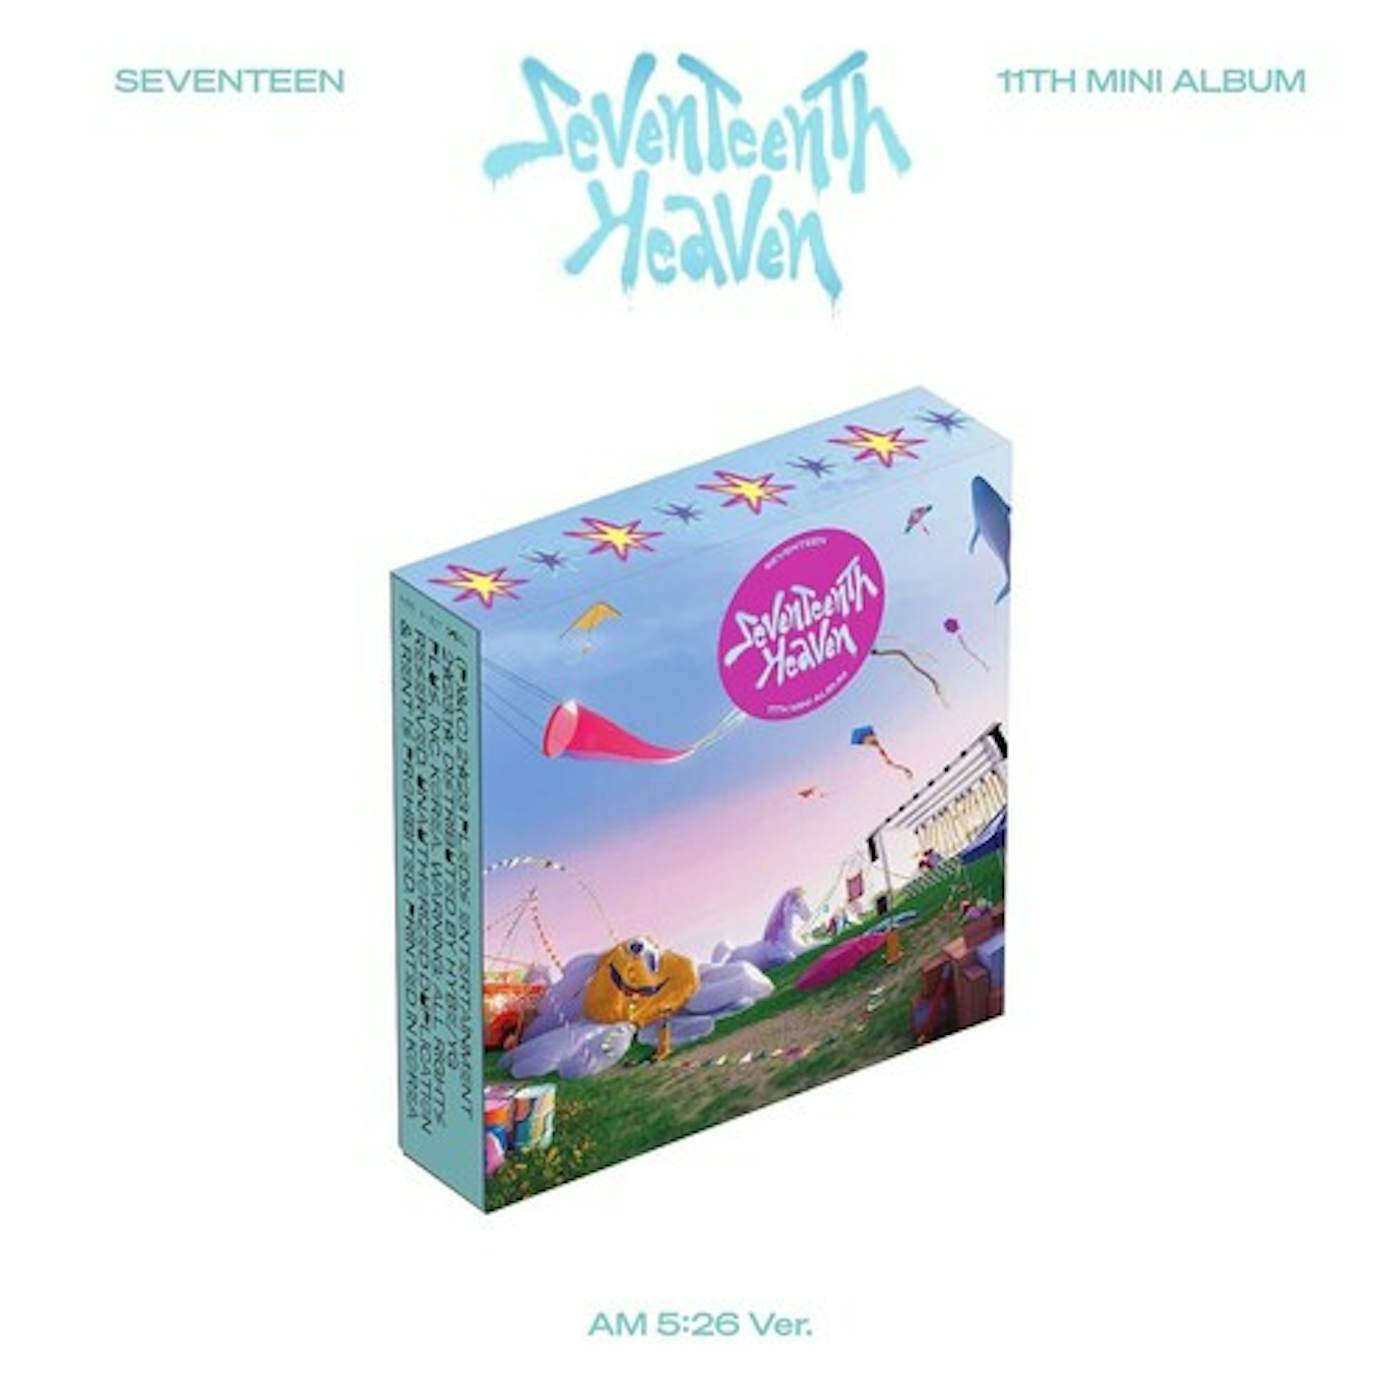 11TH MINI ALBUM 'SEVENTEENTH HEAVEN' AM 5:26 VER CD